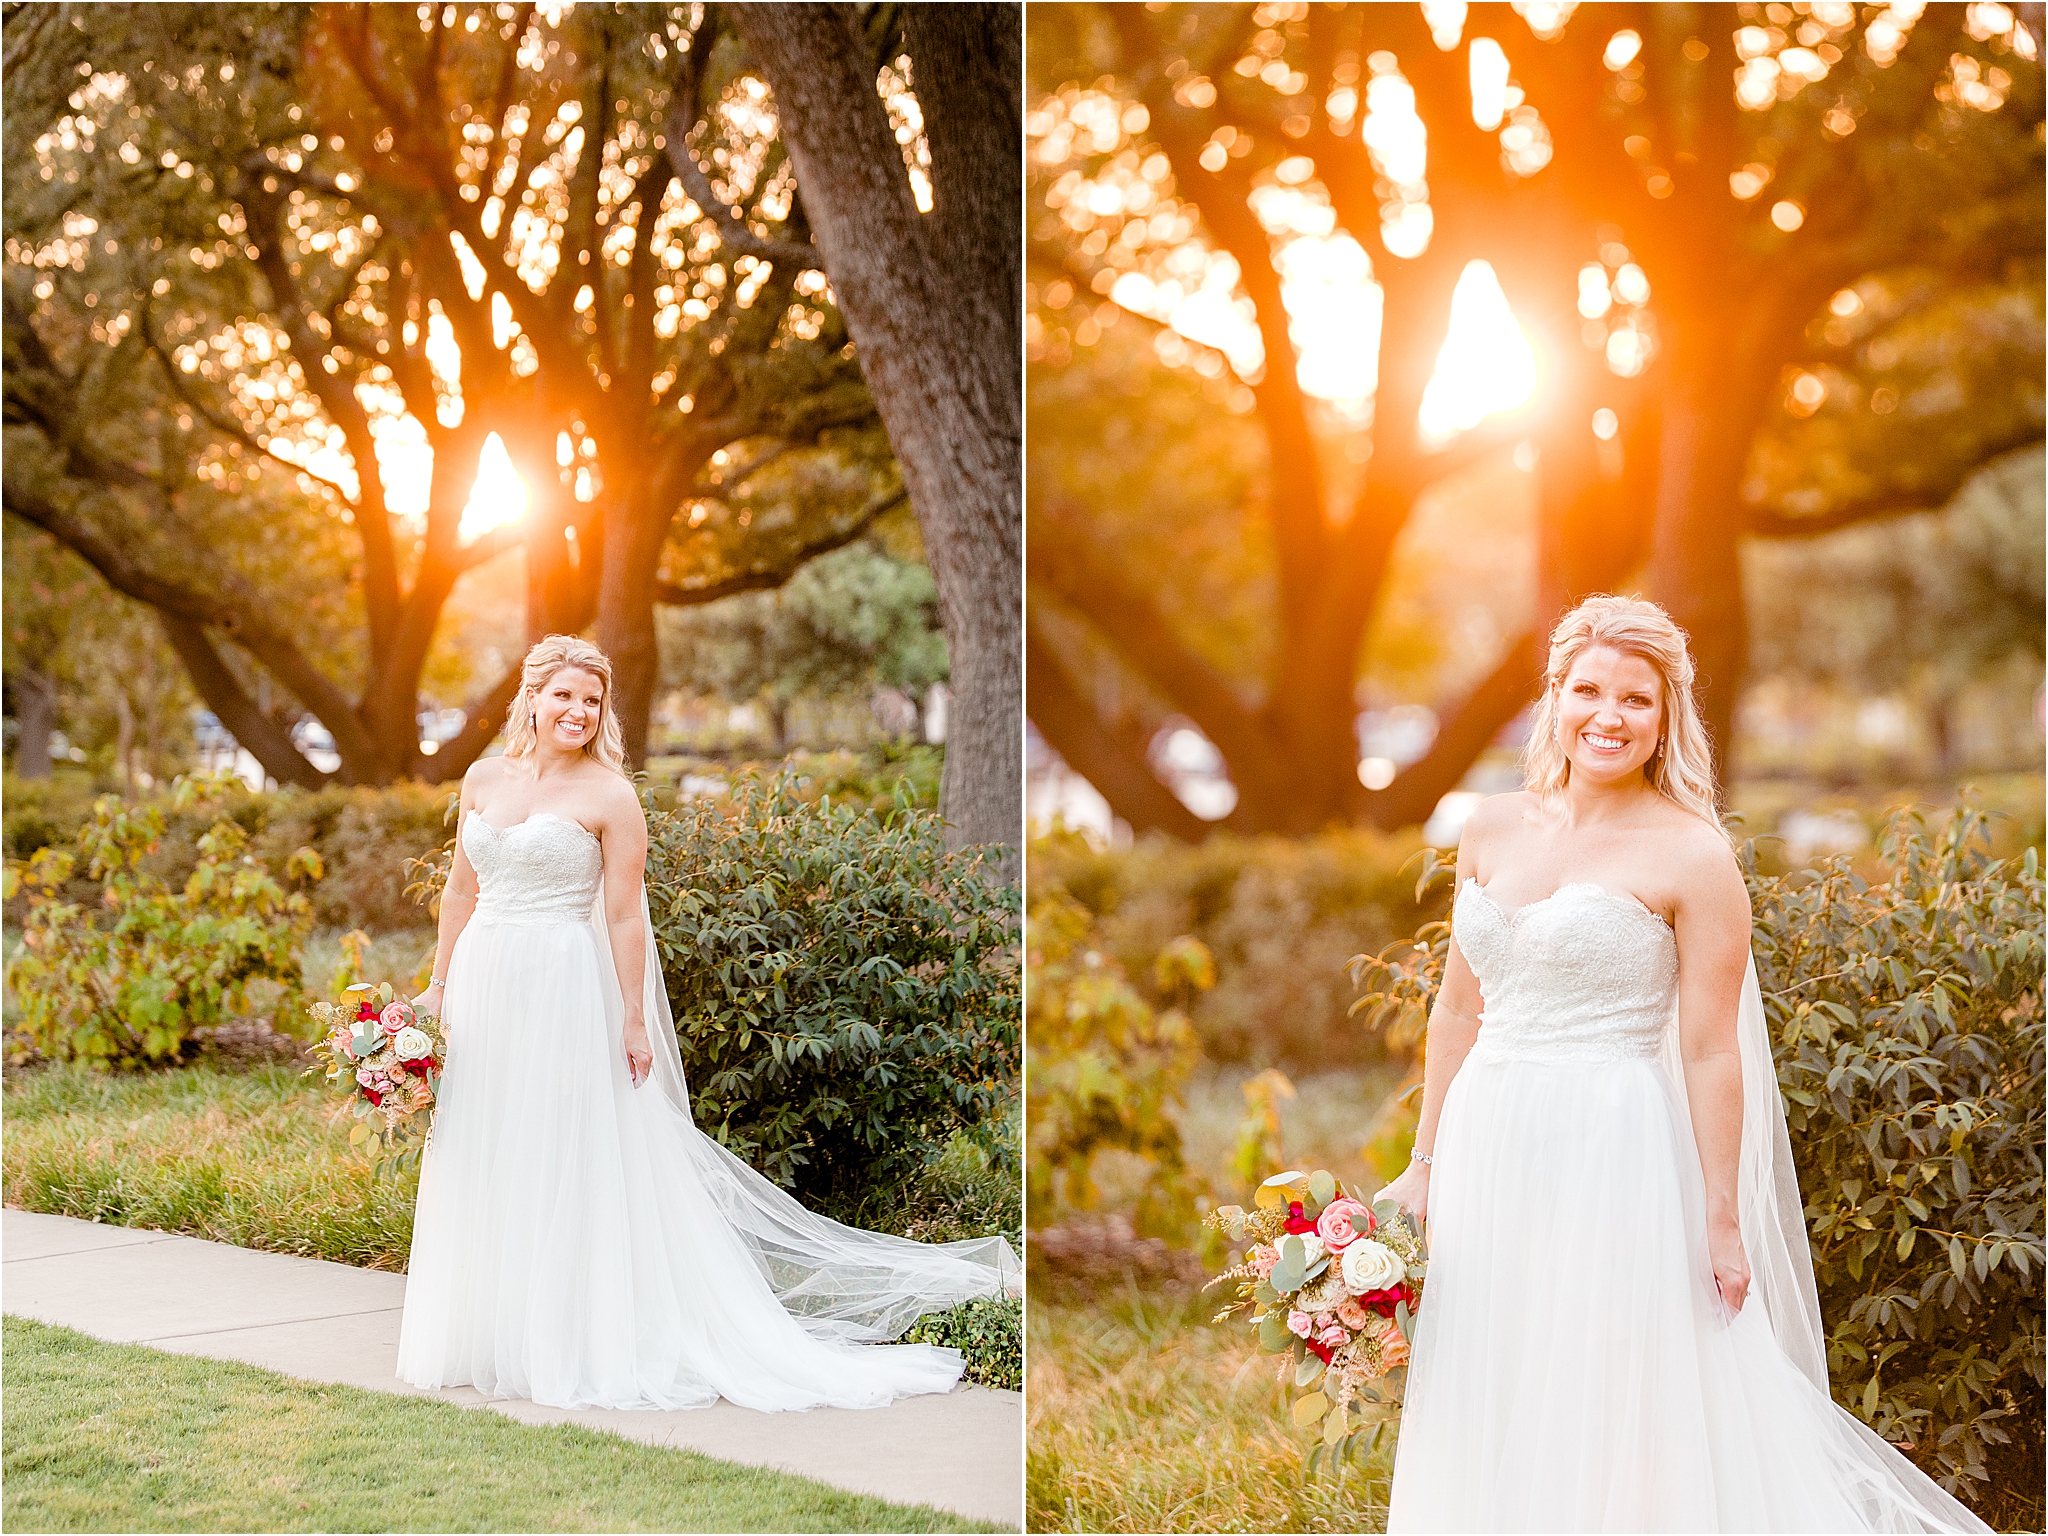 Outdoor Highland Park Bridal Session in Dallas, TX by DFW Wedding Photographer Jillian Hogan Photography 